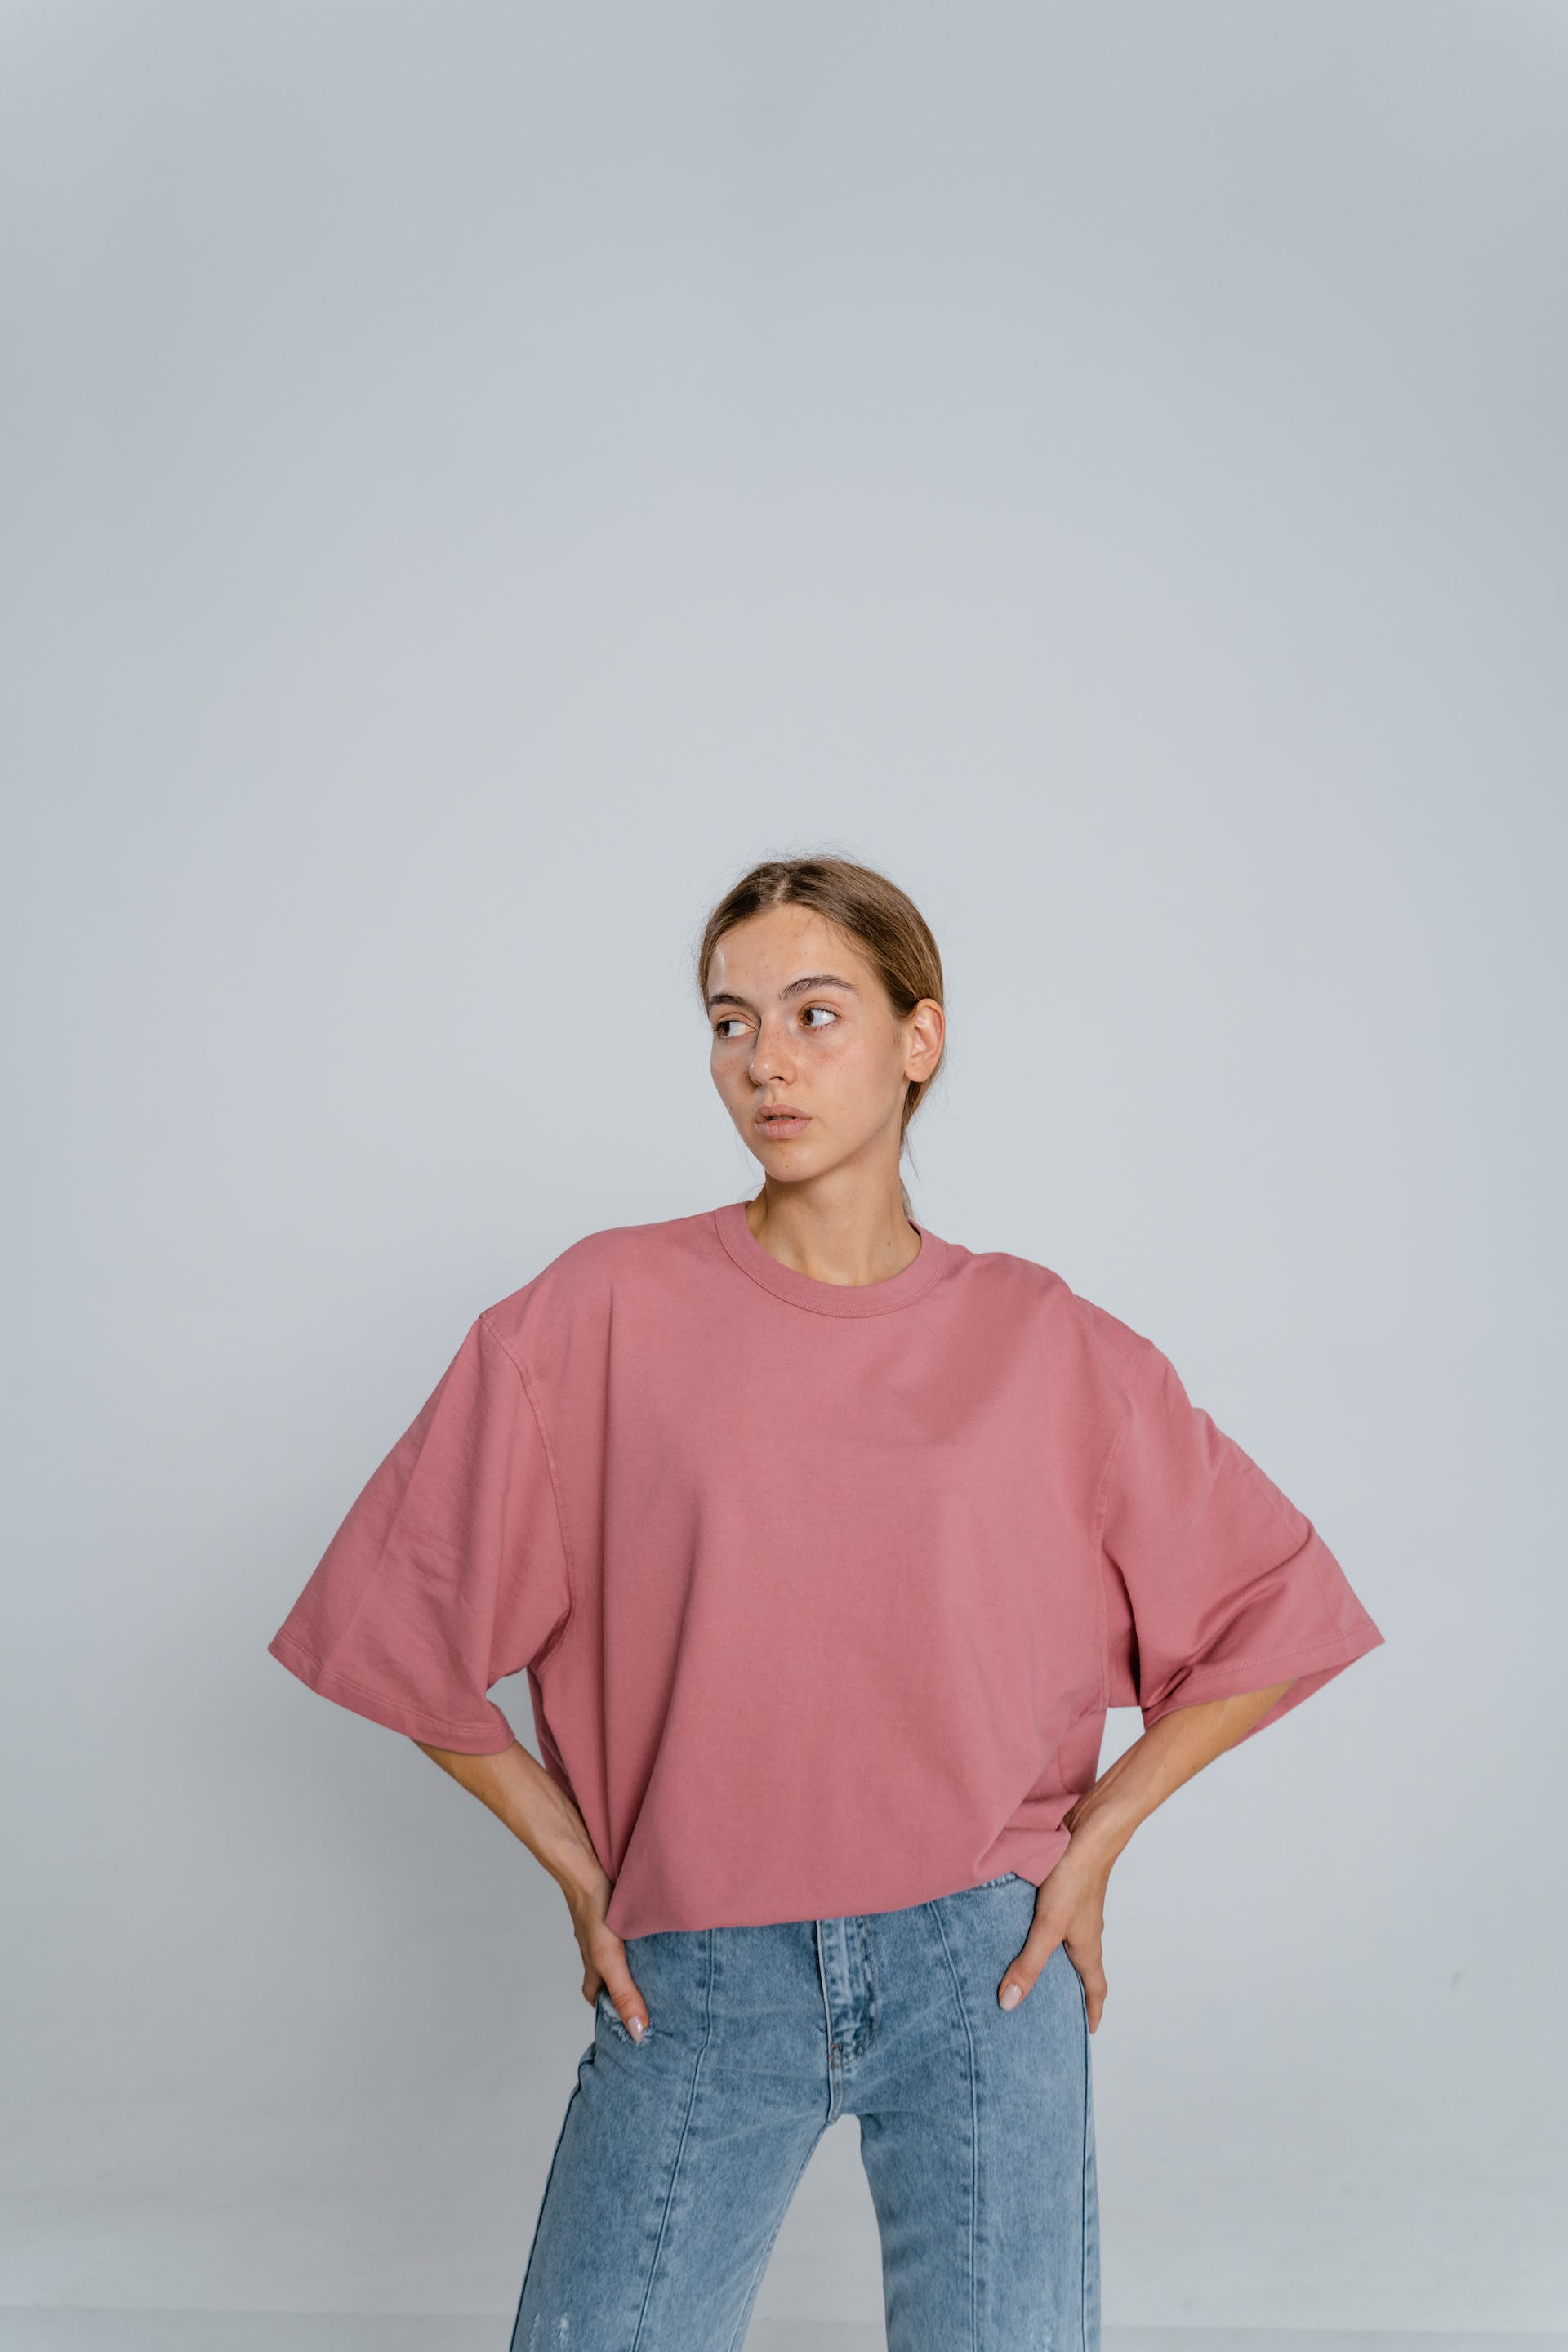 Women's Oversized T-shirt Outfit Ideas